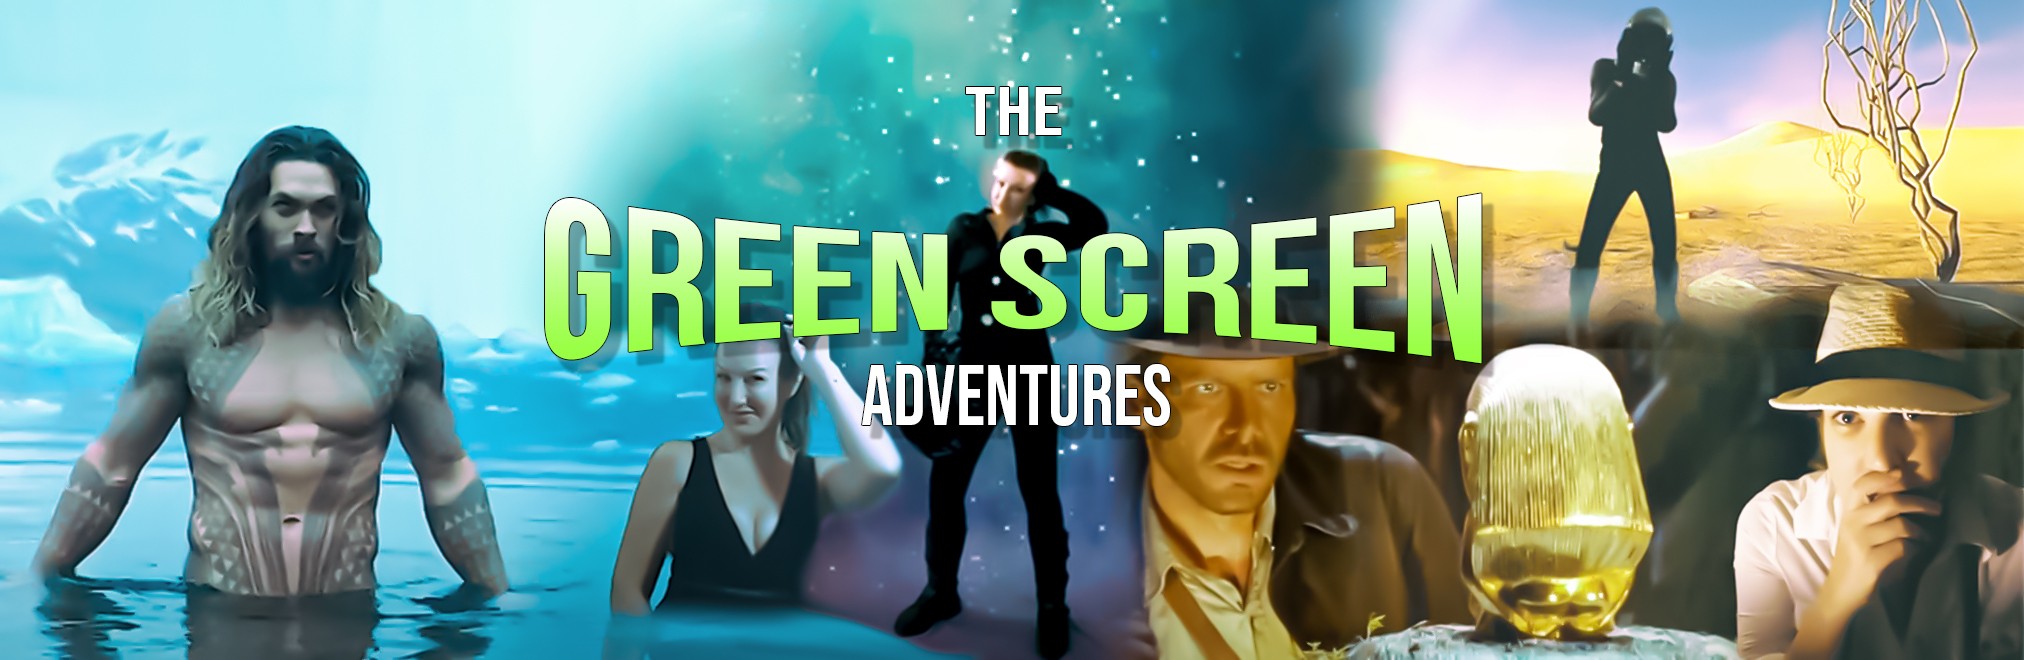 The Green Screen Adventures ^^